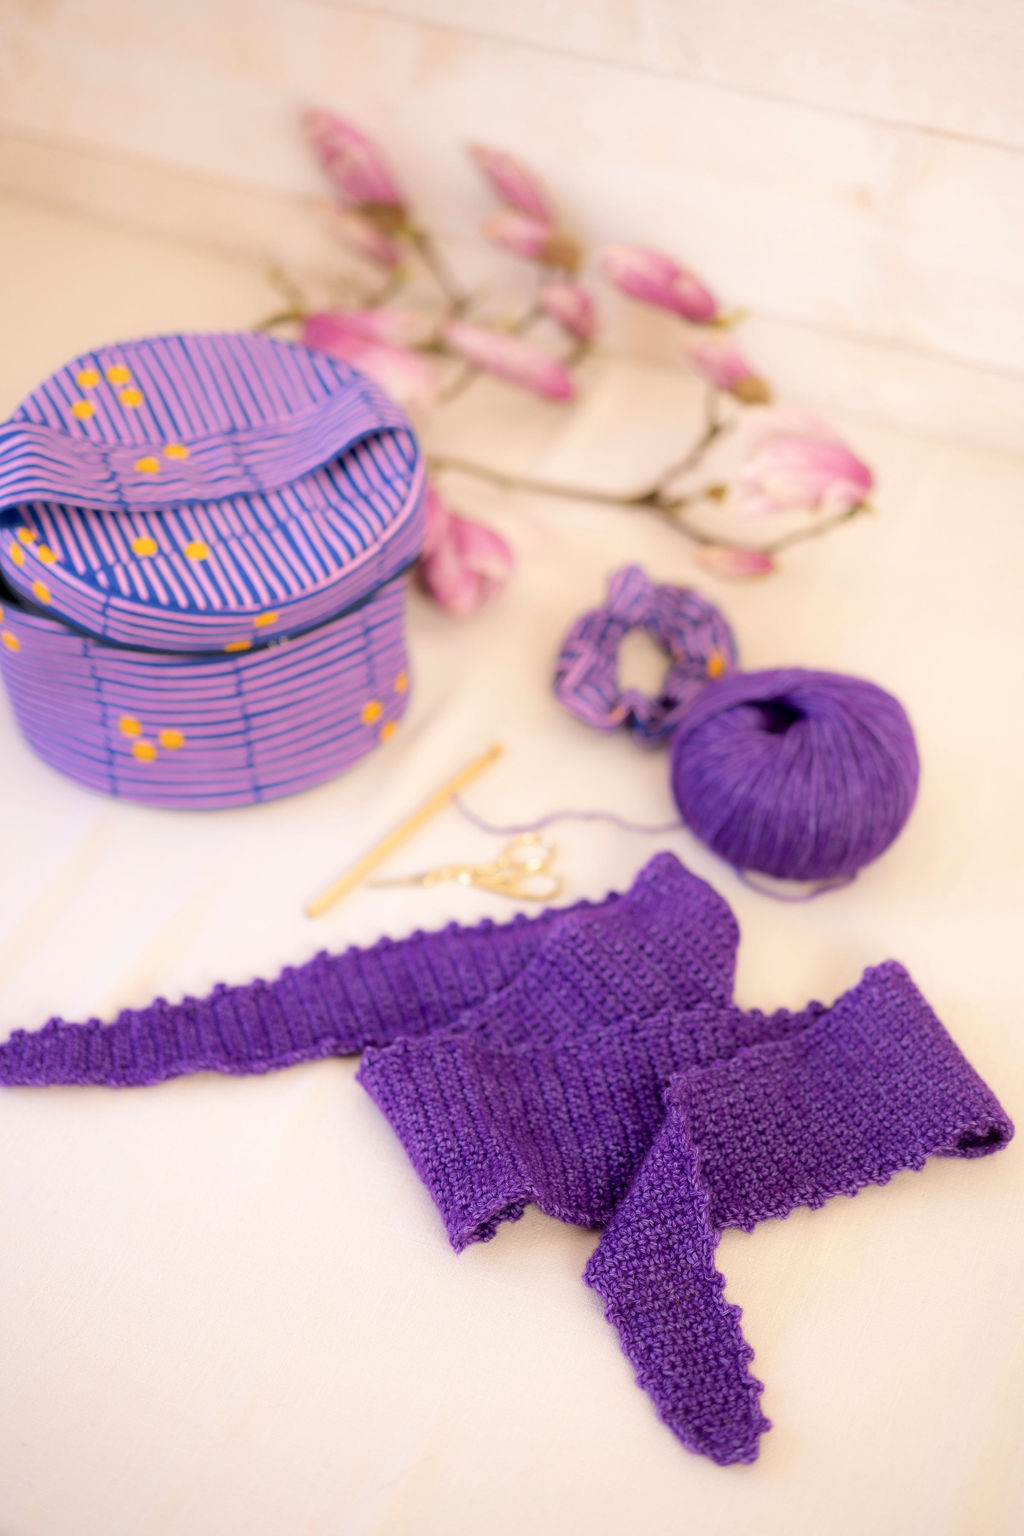 pointe-crochet-picots-violet-ambiance-ck59-1